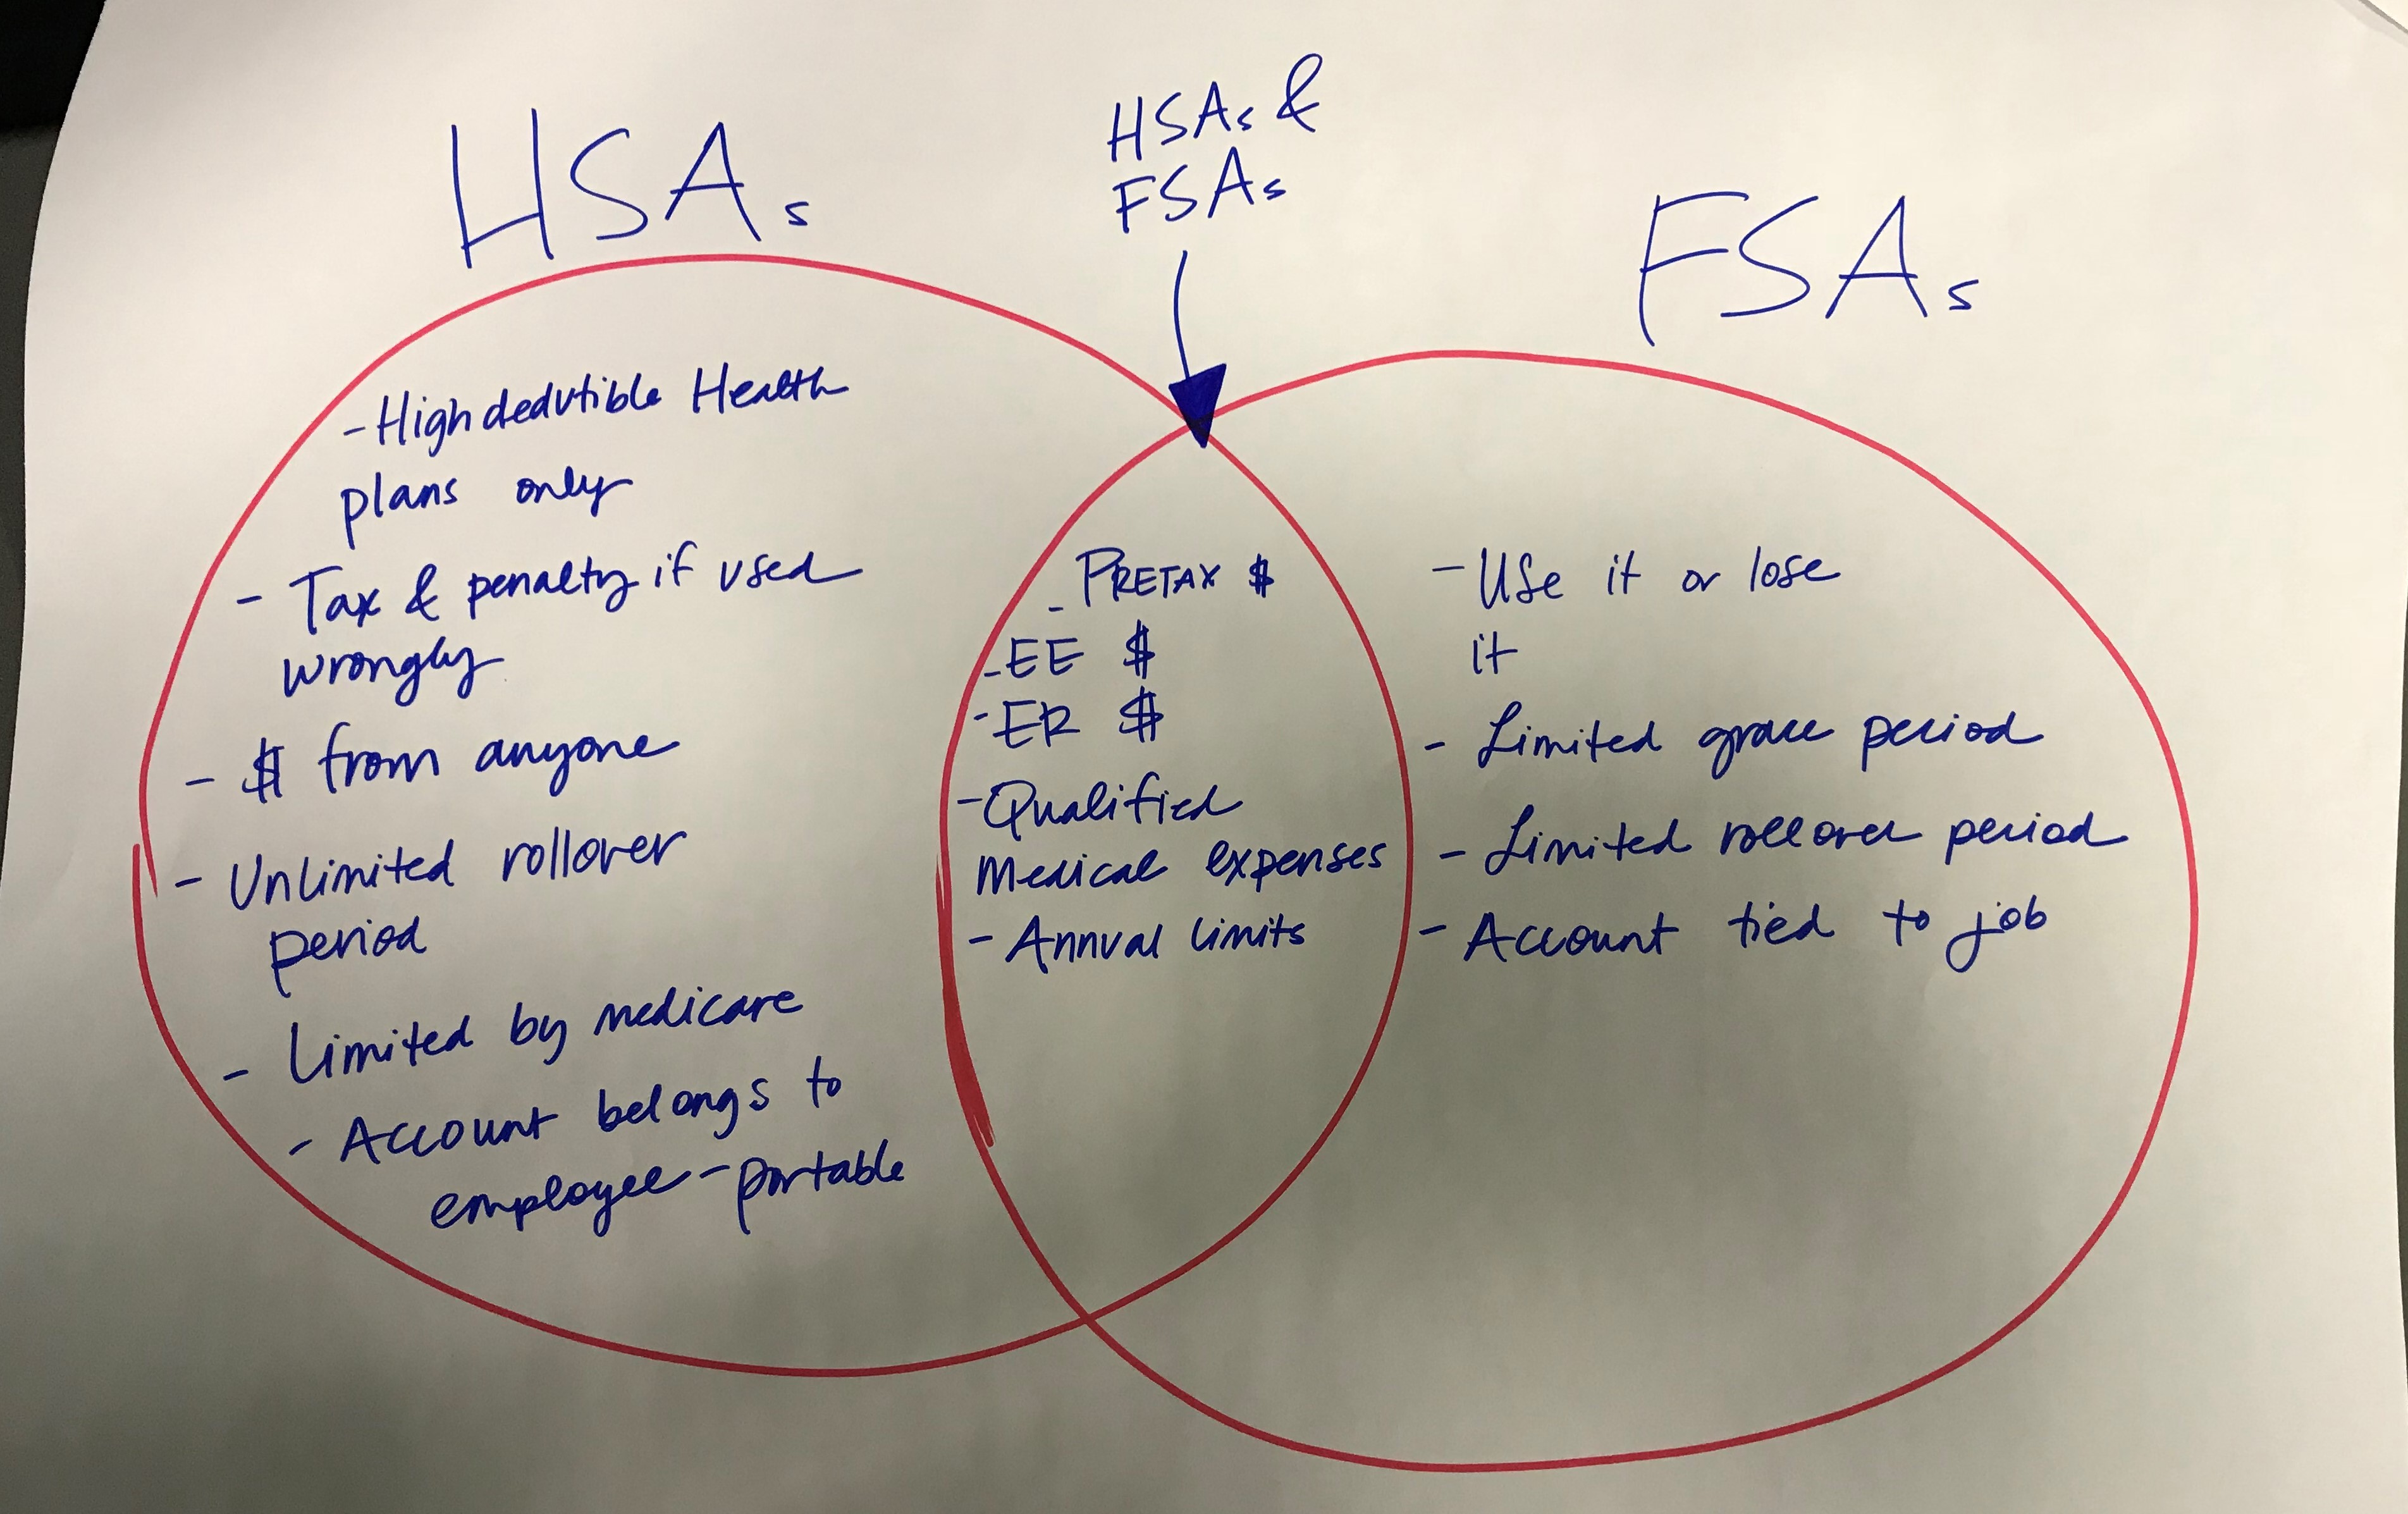 HSA vs FSA